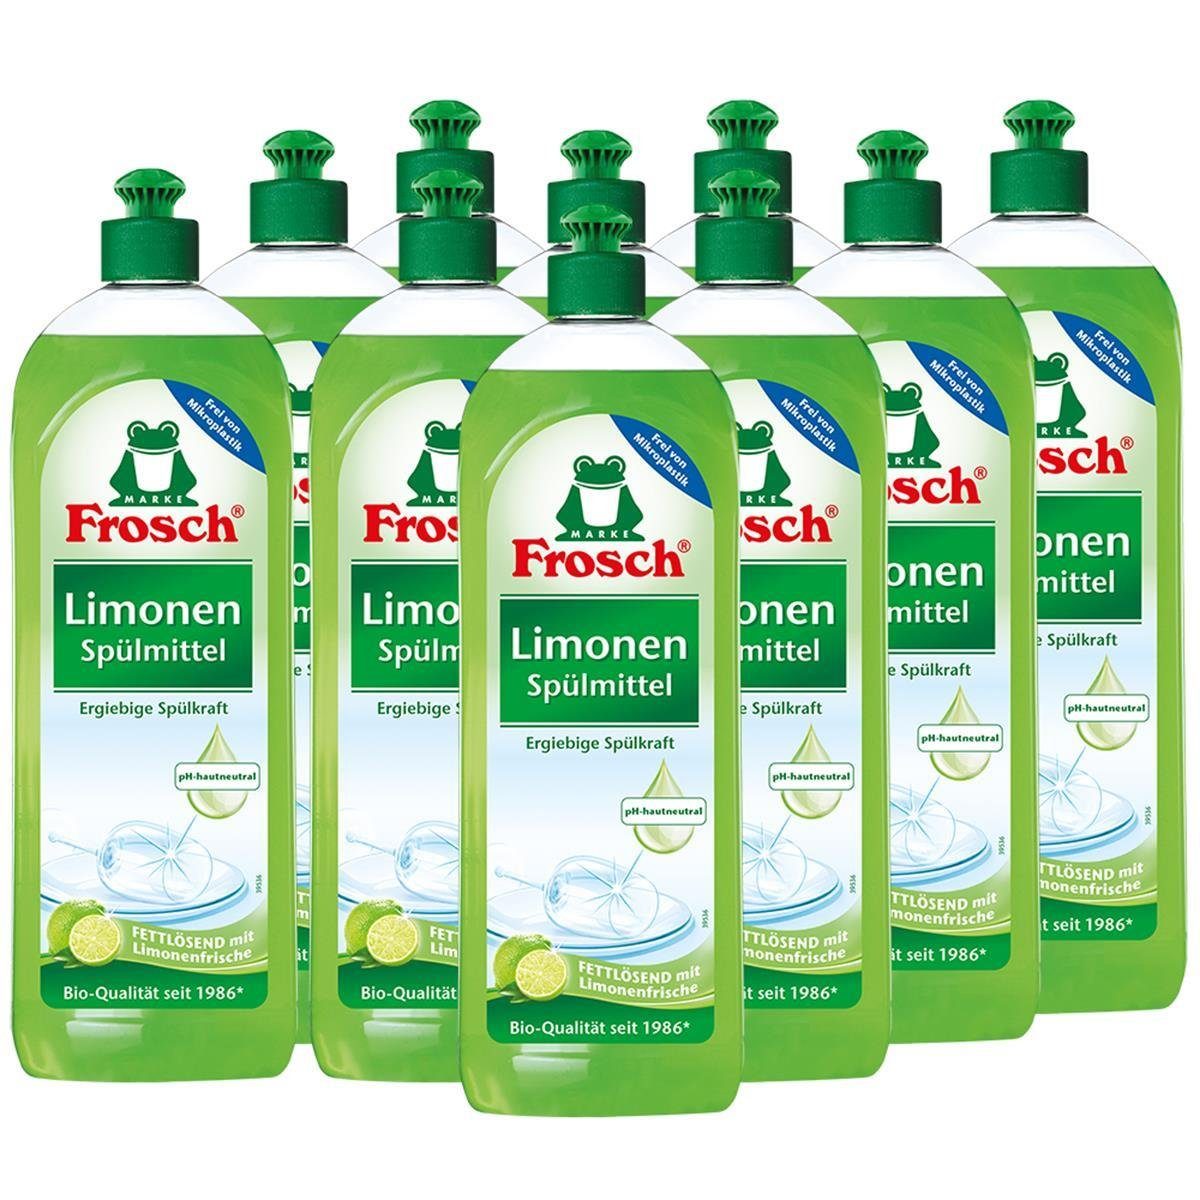 FROSCH 10x Frosch Spülmittel 750 ml mit fettlösenden Limonen-Extrakten Geschirrspülmittel | Geschirrspülmittel